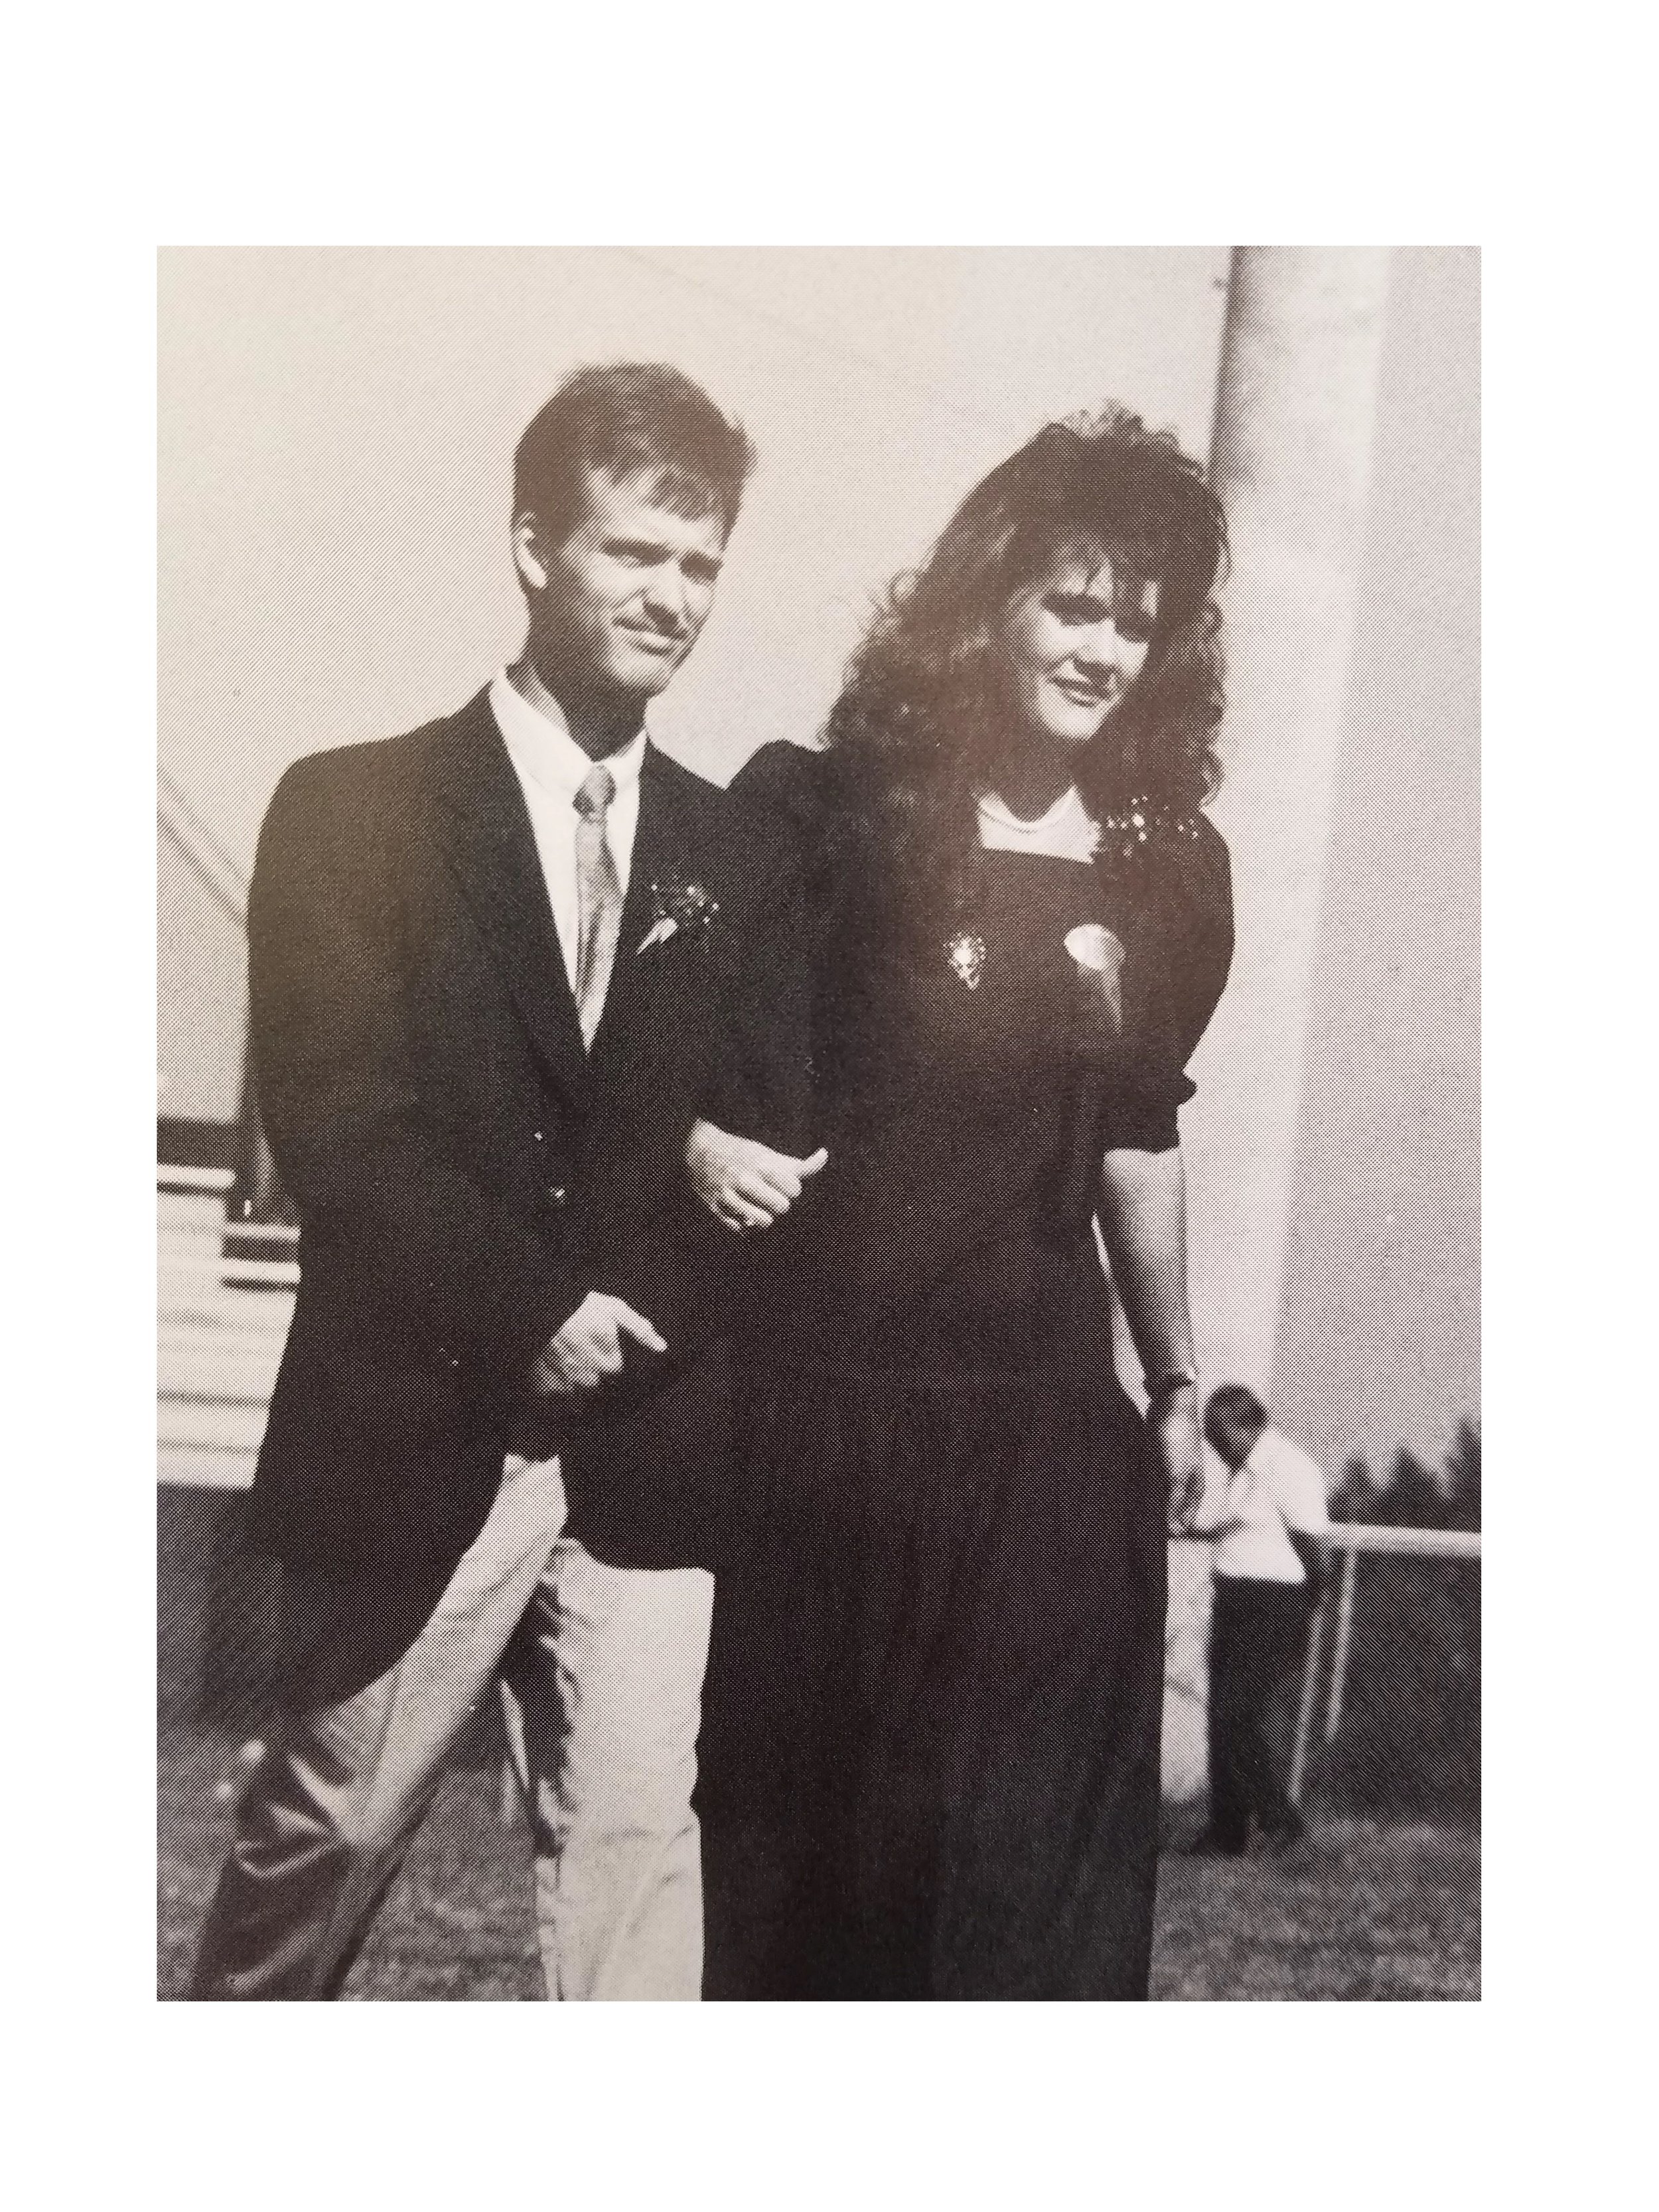 Mike Blackwood escorts Kimberly Yeomans onto the homecoming court 1988.Photo courtsey of Aurora '89